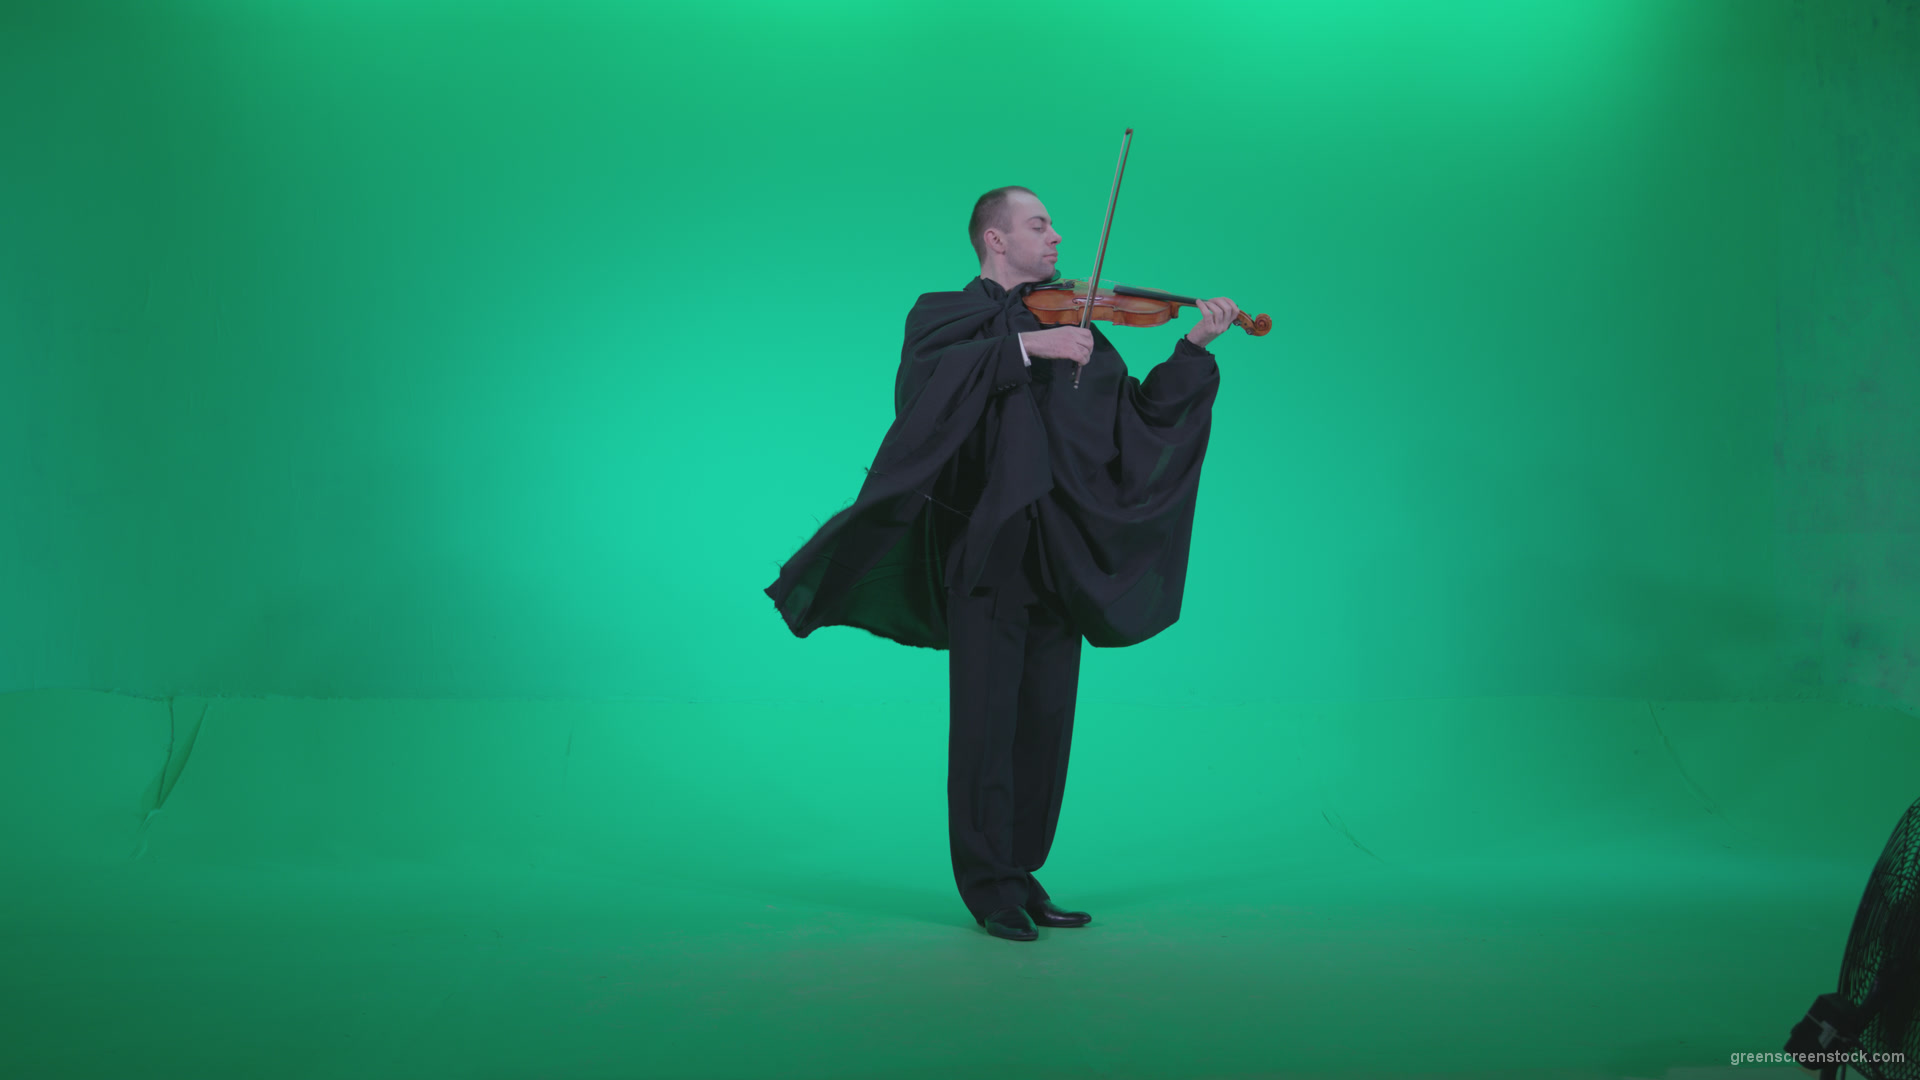 Professional-Violin-player-man-z4_001 Green Screen Stock